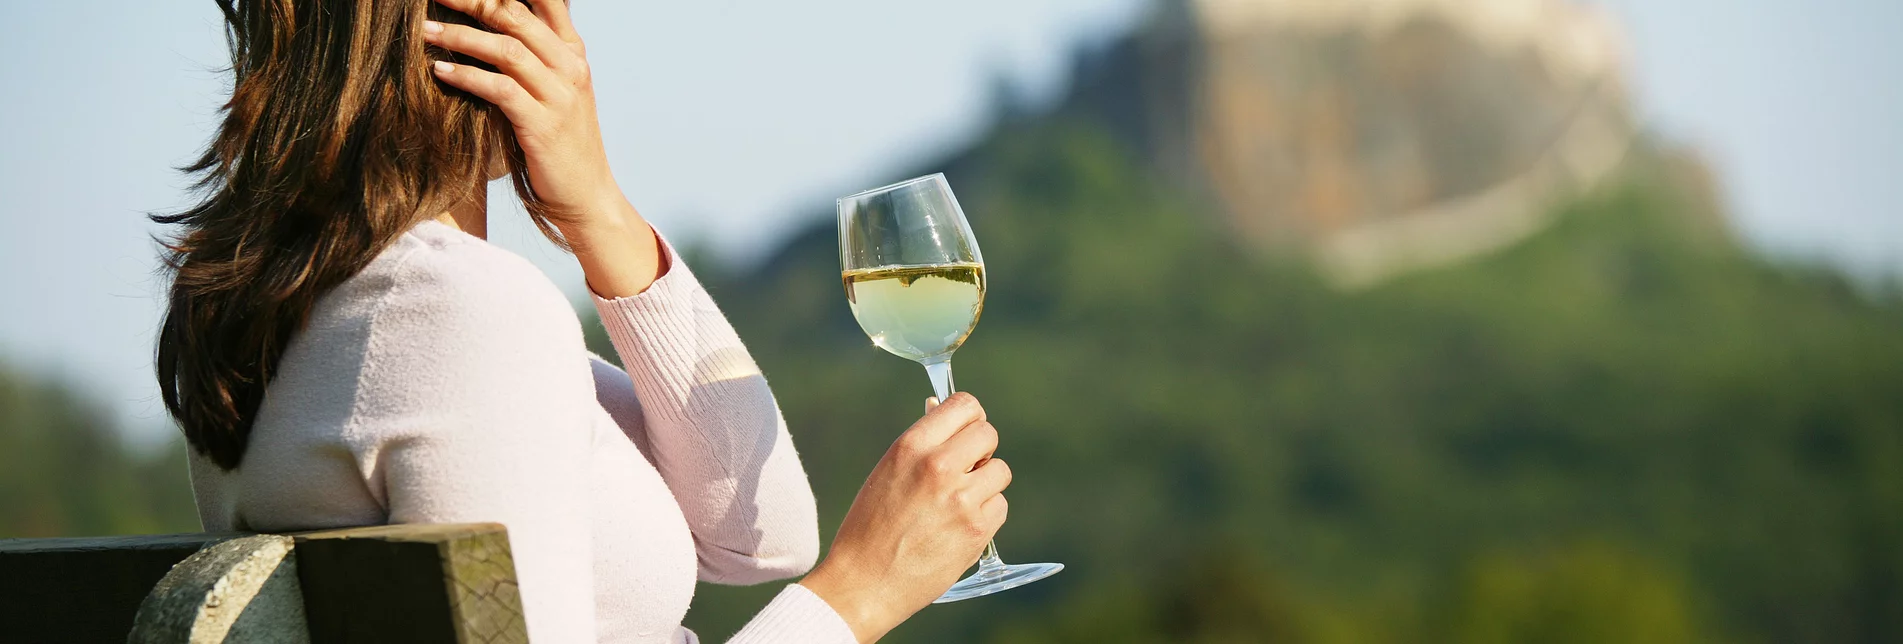 Enjoy the view with a glass of wine | © Thermen- & Vulkanland Steiermark | Harald Eisenberger